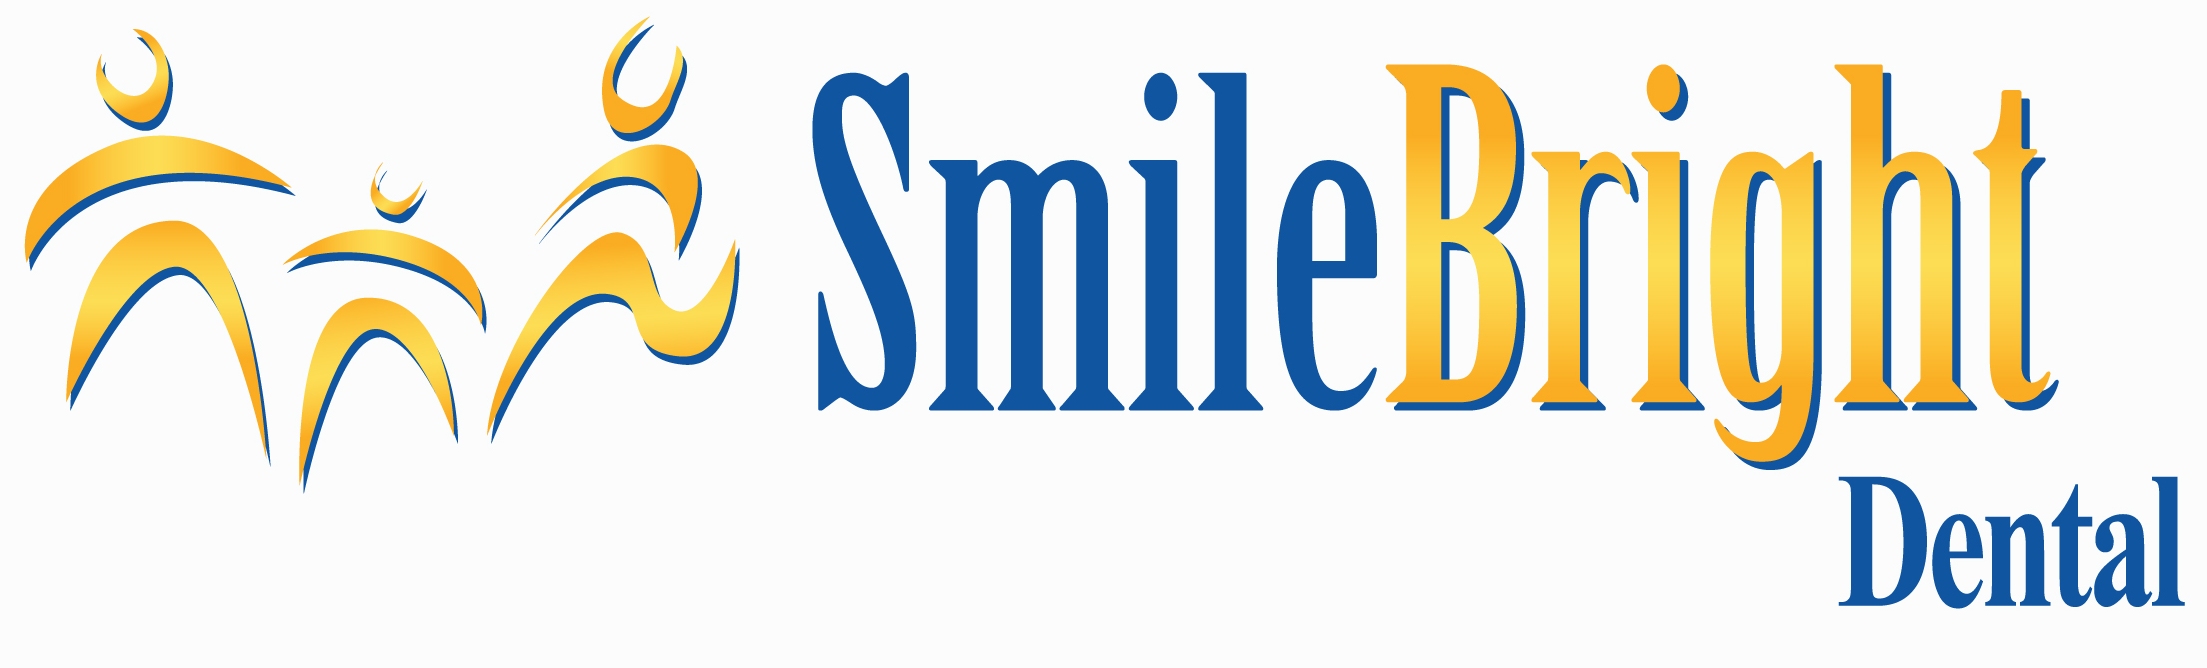 Smilebright Dental